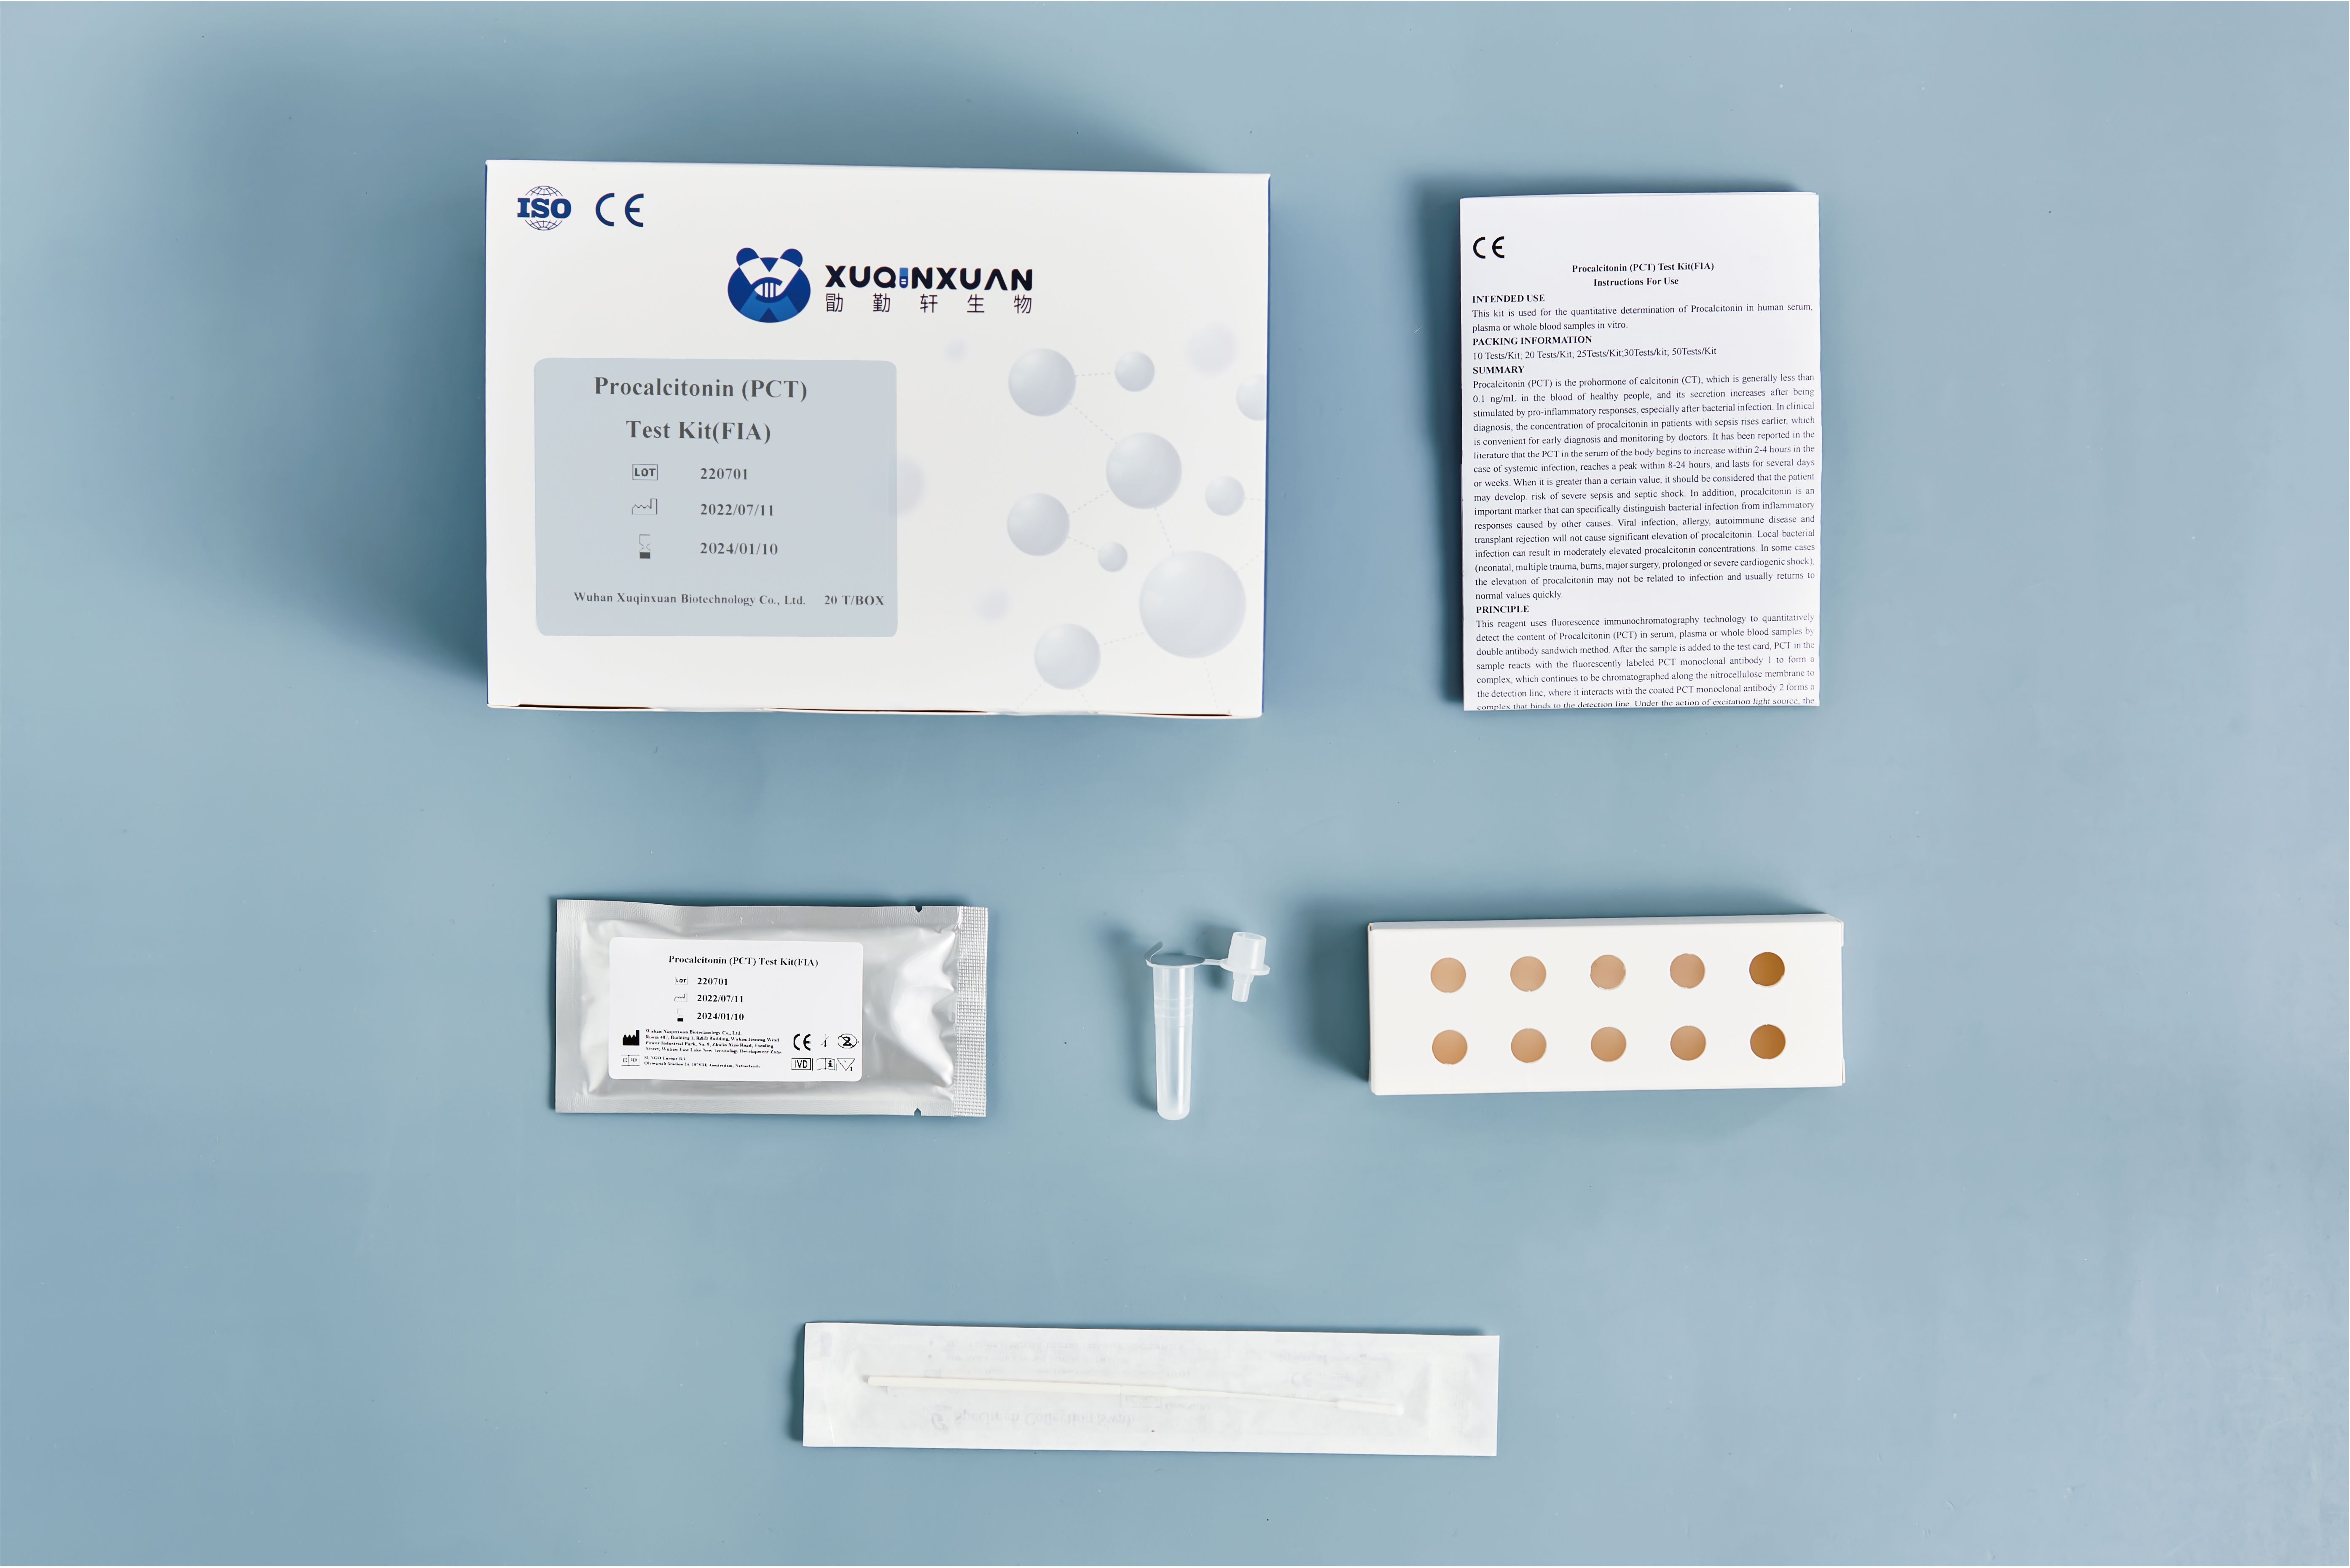 Procalcitonin (PCT) Test Kit(FIA) 